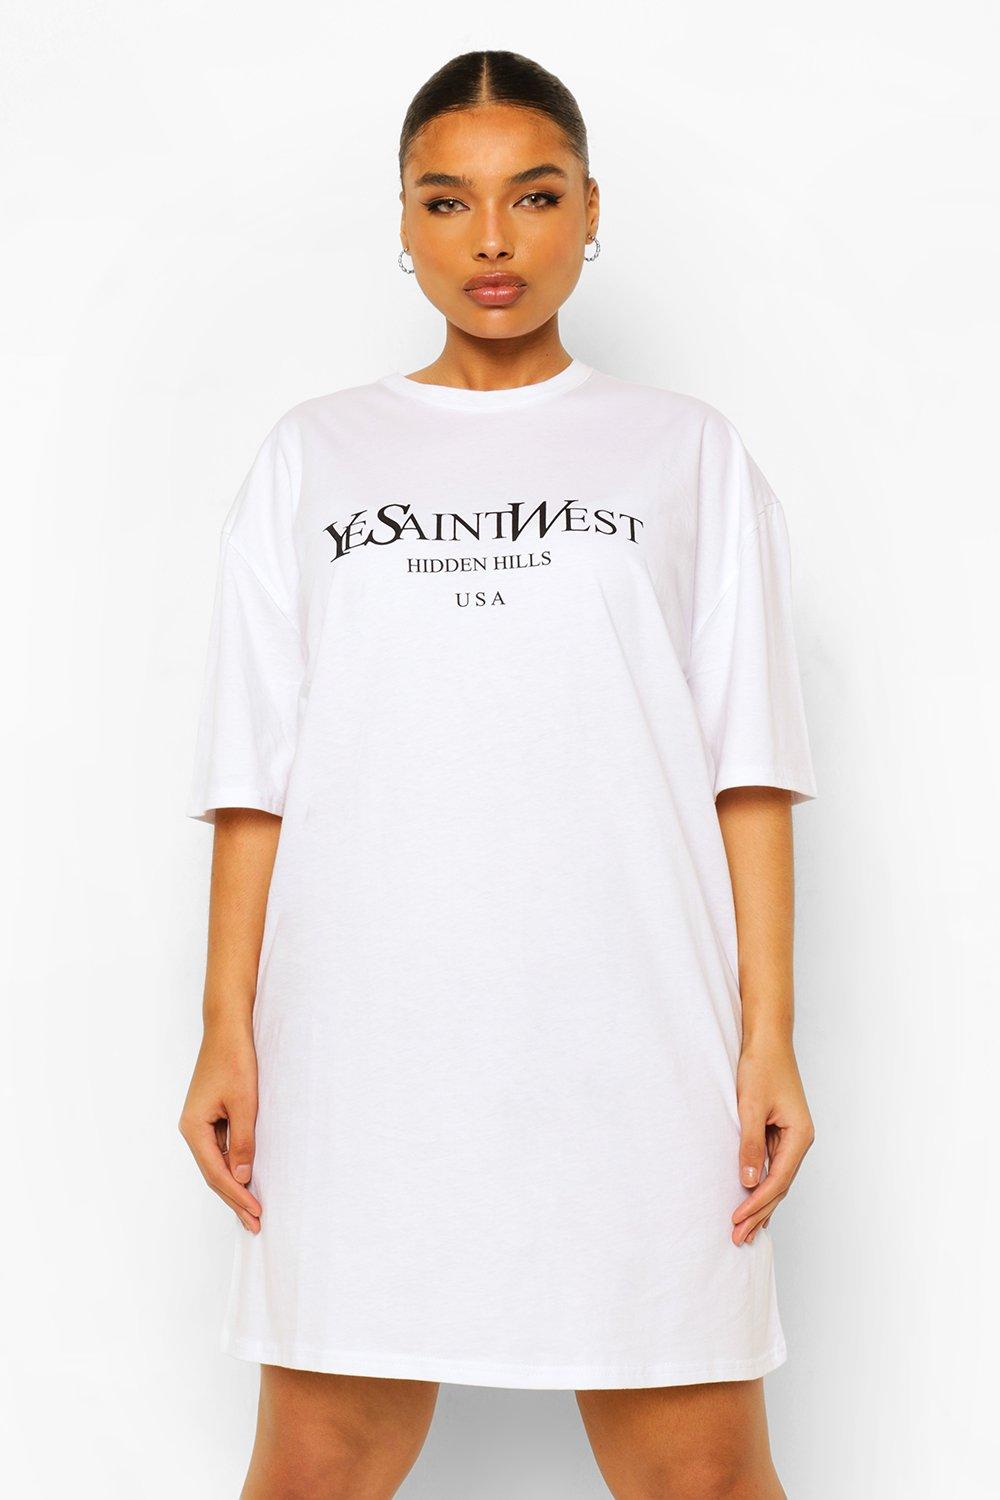 T-Shirt Dresses | Oversized ☀ Slogan T ...